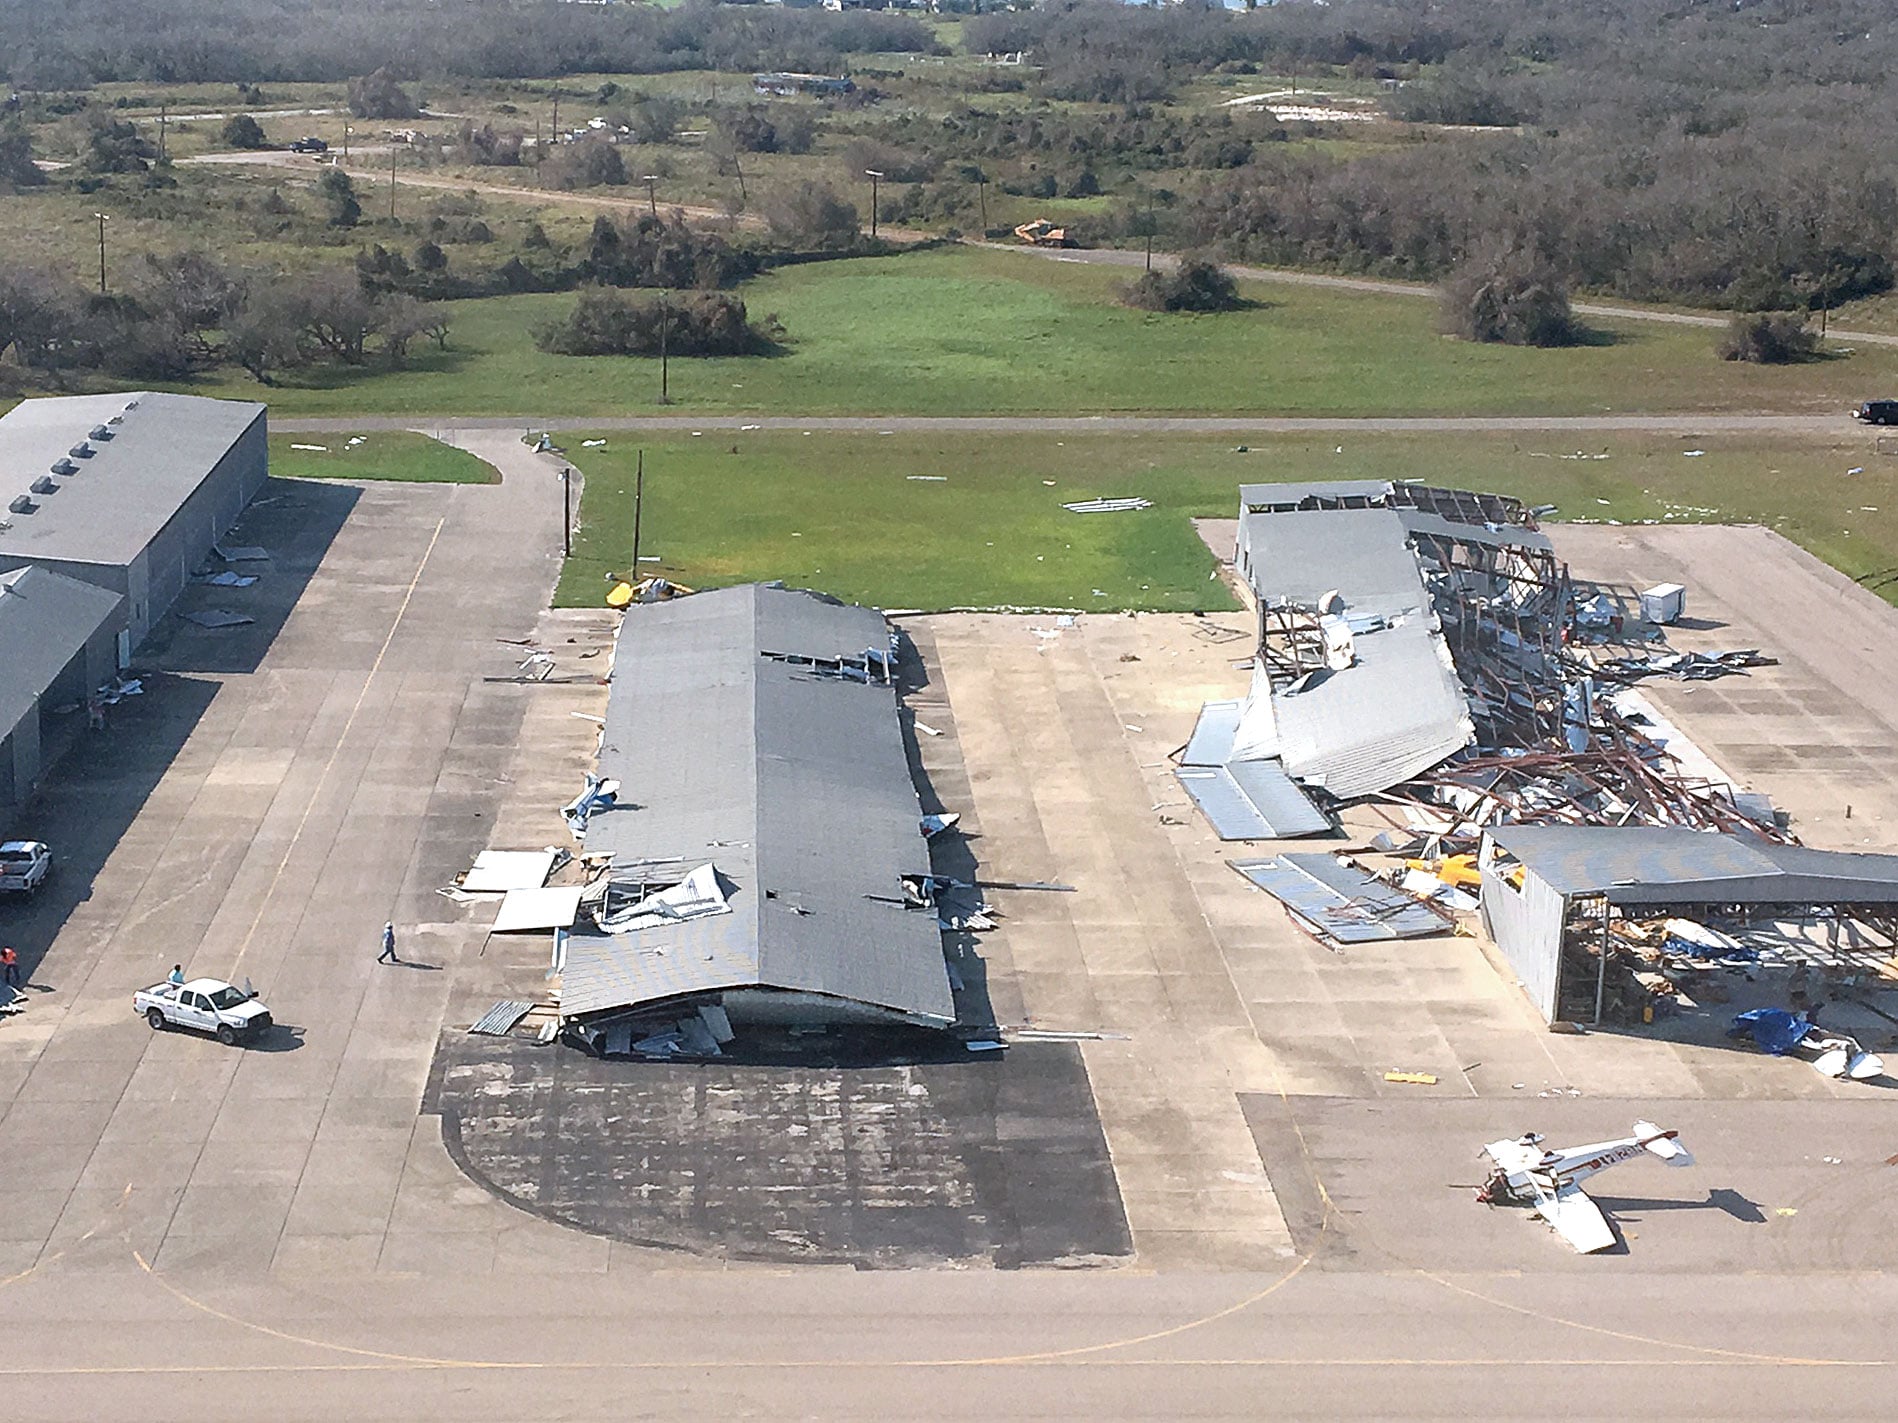 Every hangar that survived Hurricane Harvey had a Schweiss door on it